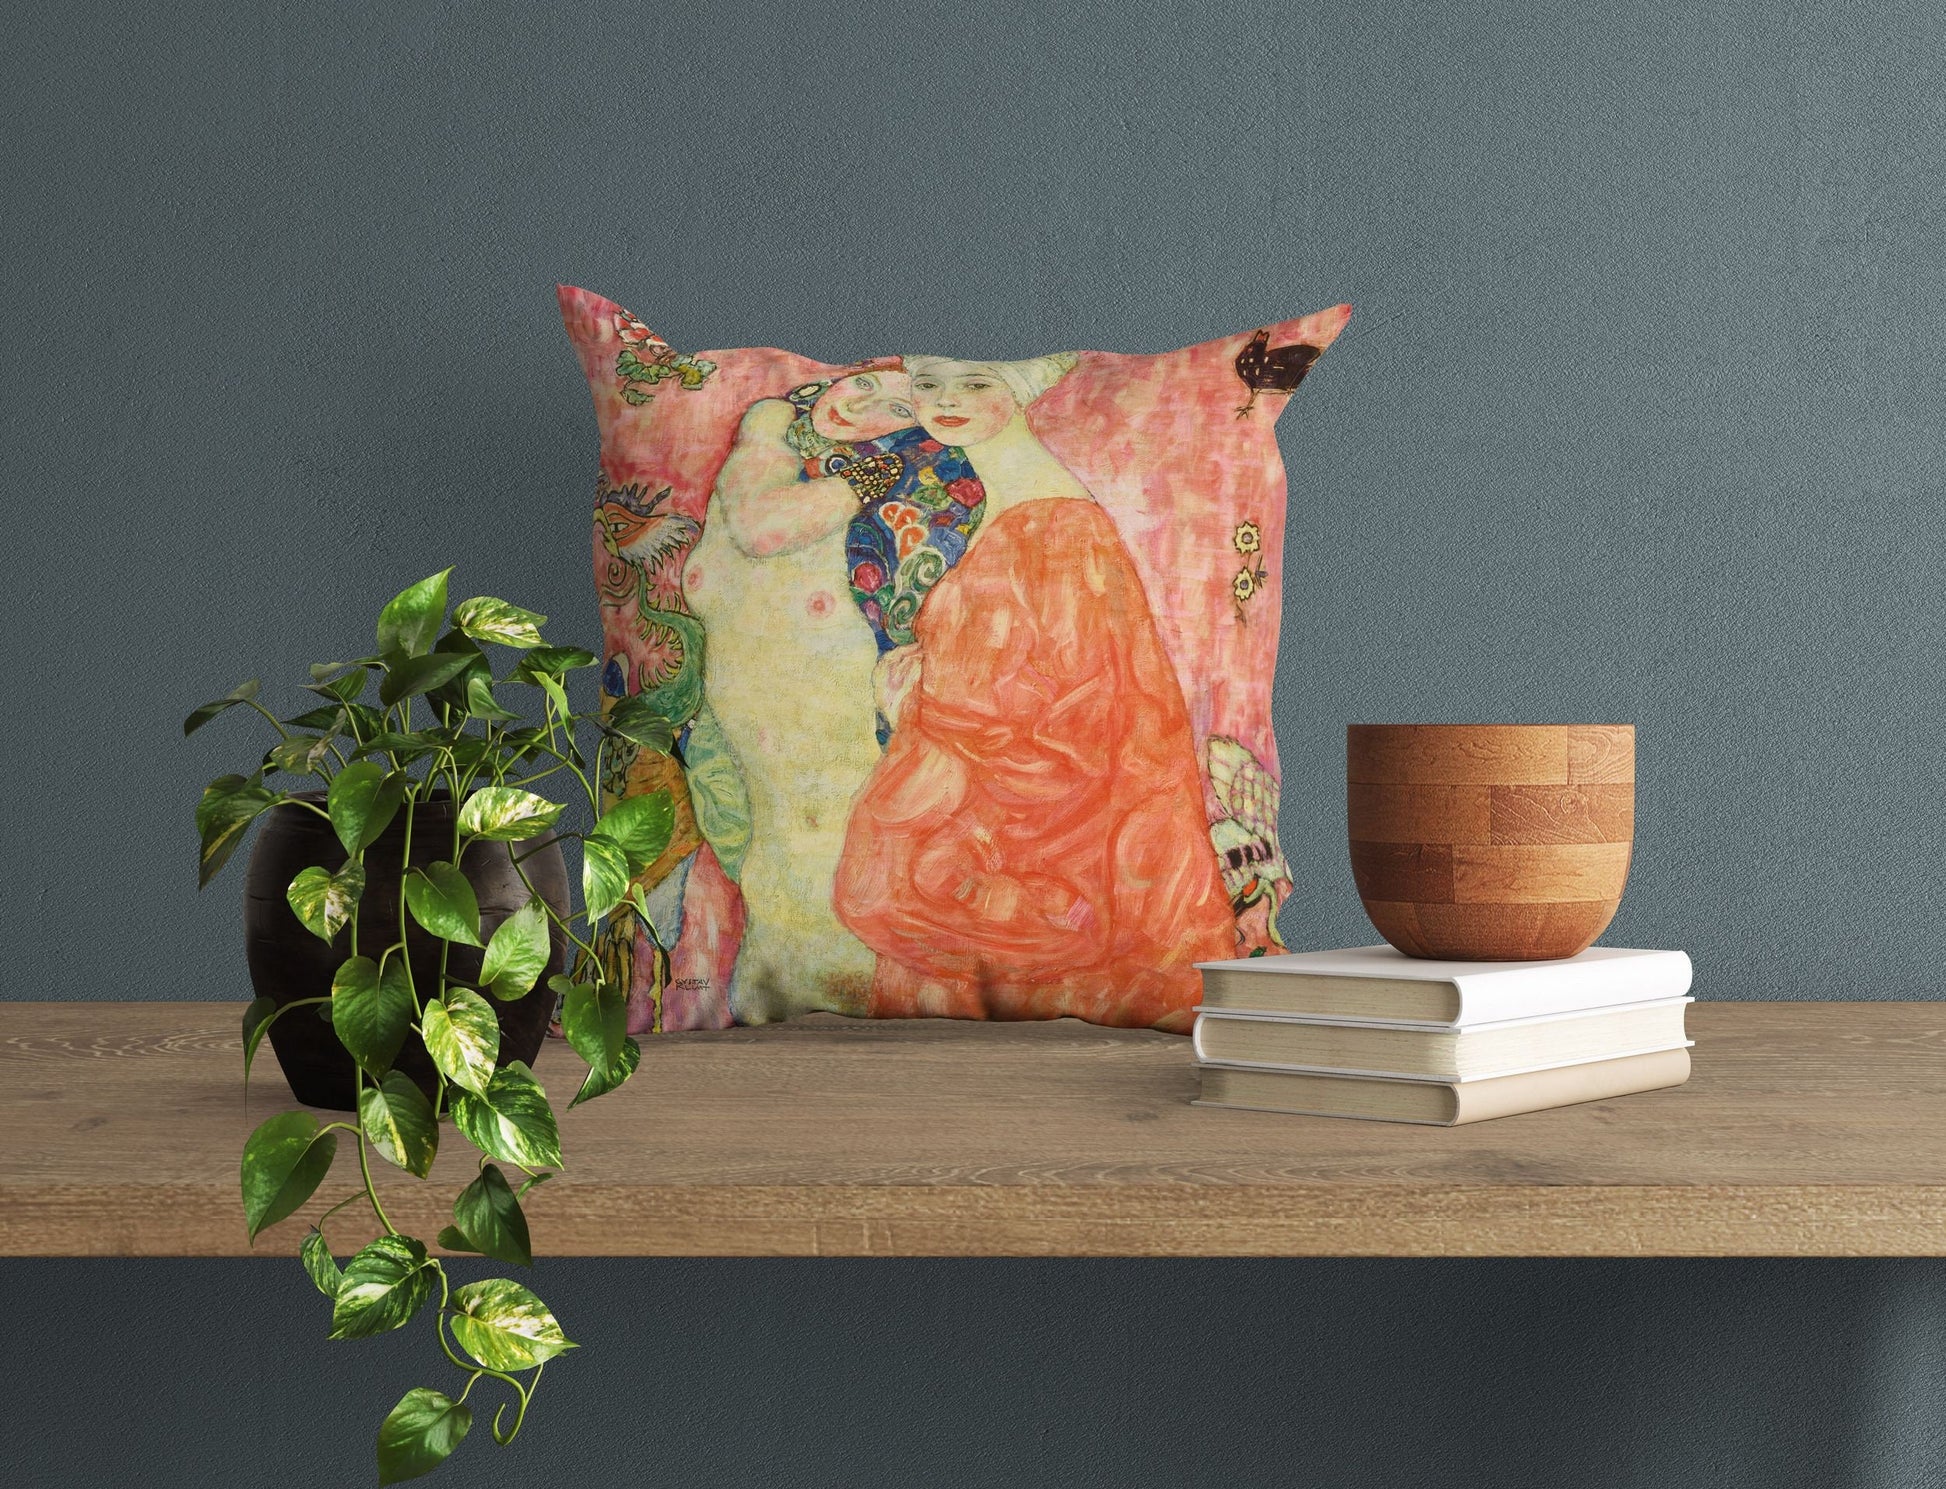 Gustave Klimt The Friends Abstract Throw Pillow Cover, Soft Pillow Cases, Colorful Pillow Case, Art Nouveau Pillow, Square Pillow